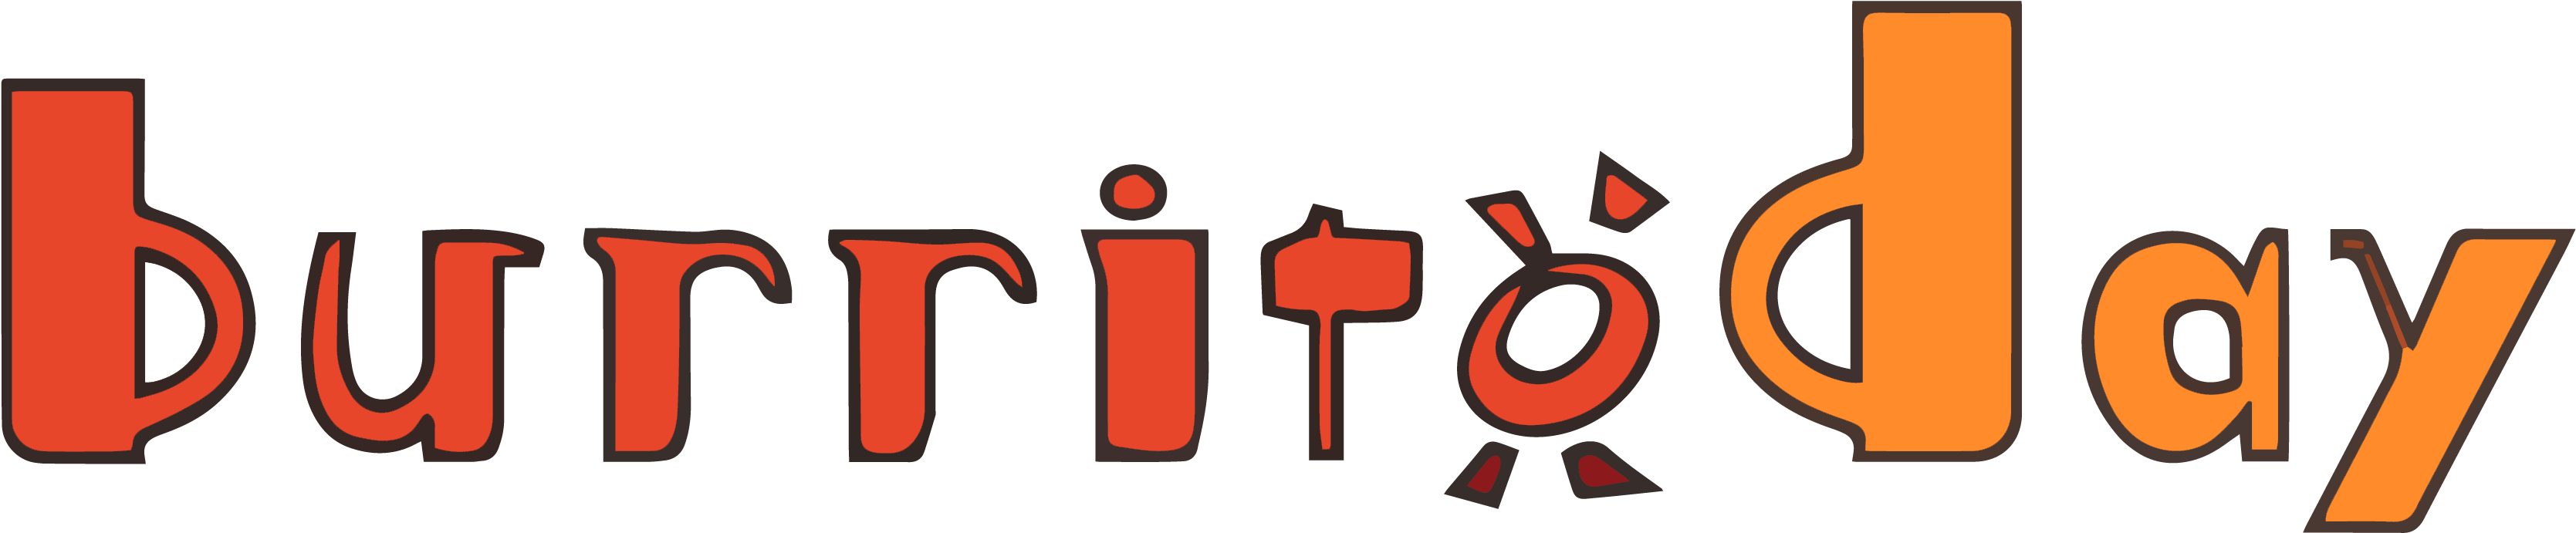 Logo Logo Logo Logo Logo - National Burrito Day 2018 (3438x832)